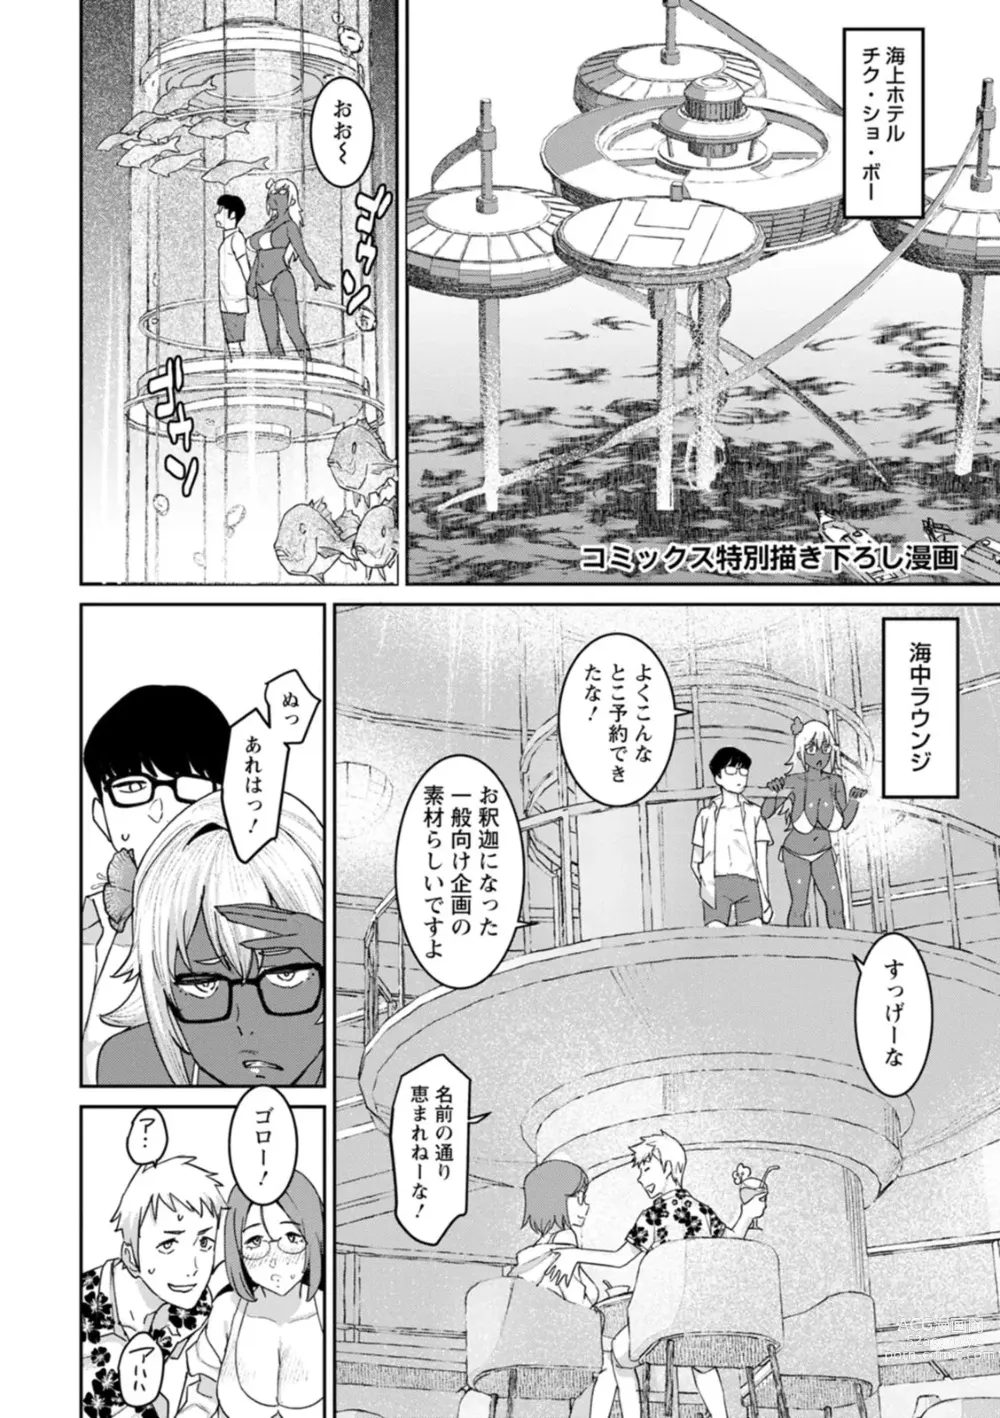 Page 180 of manga Tokunou Mama Milk - Specially thick mothers milk